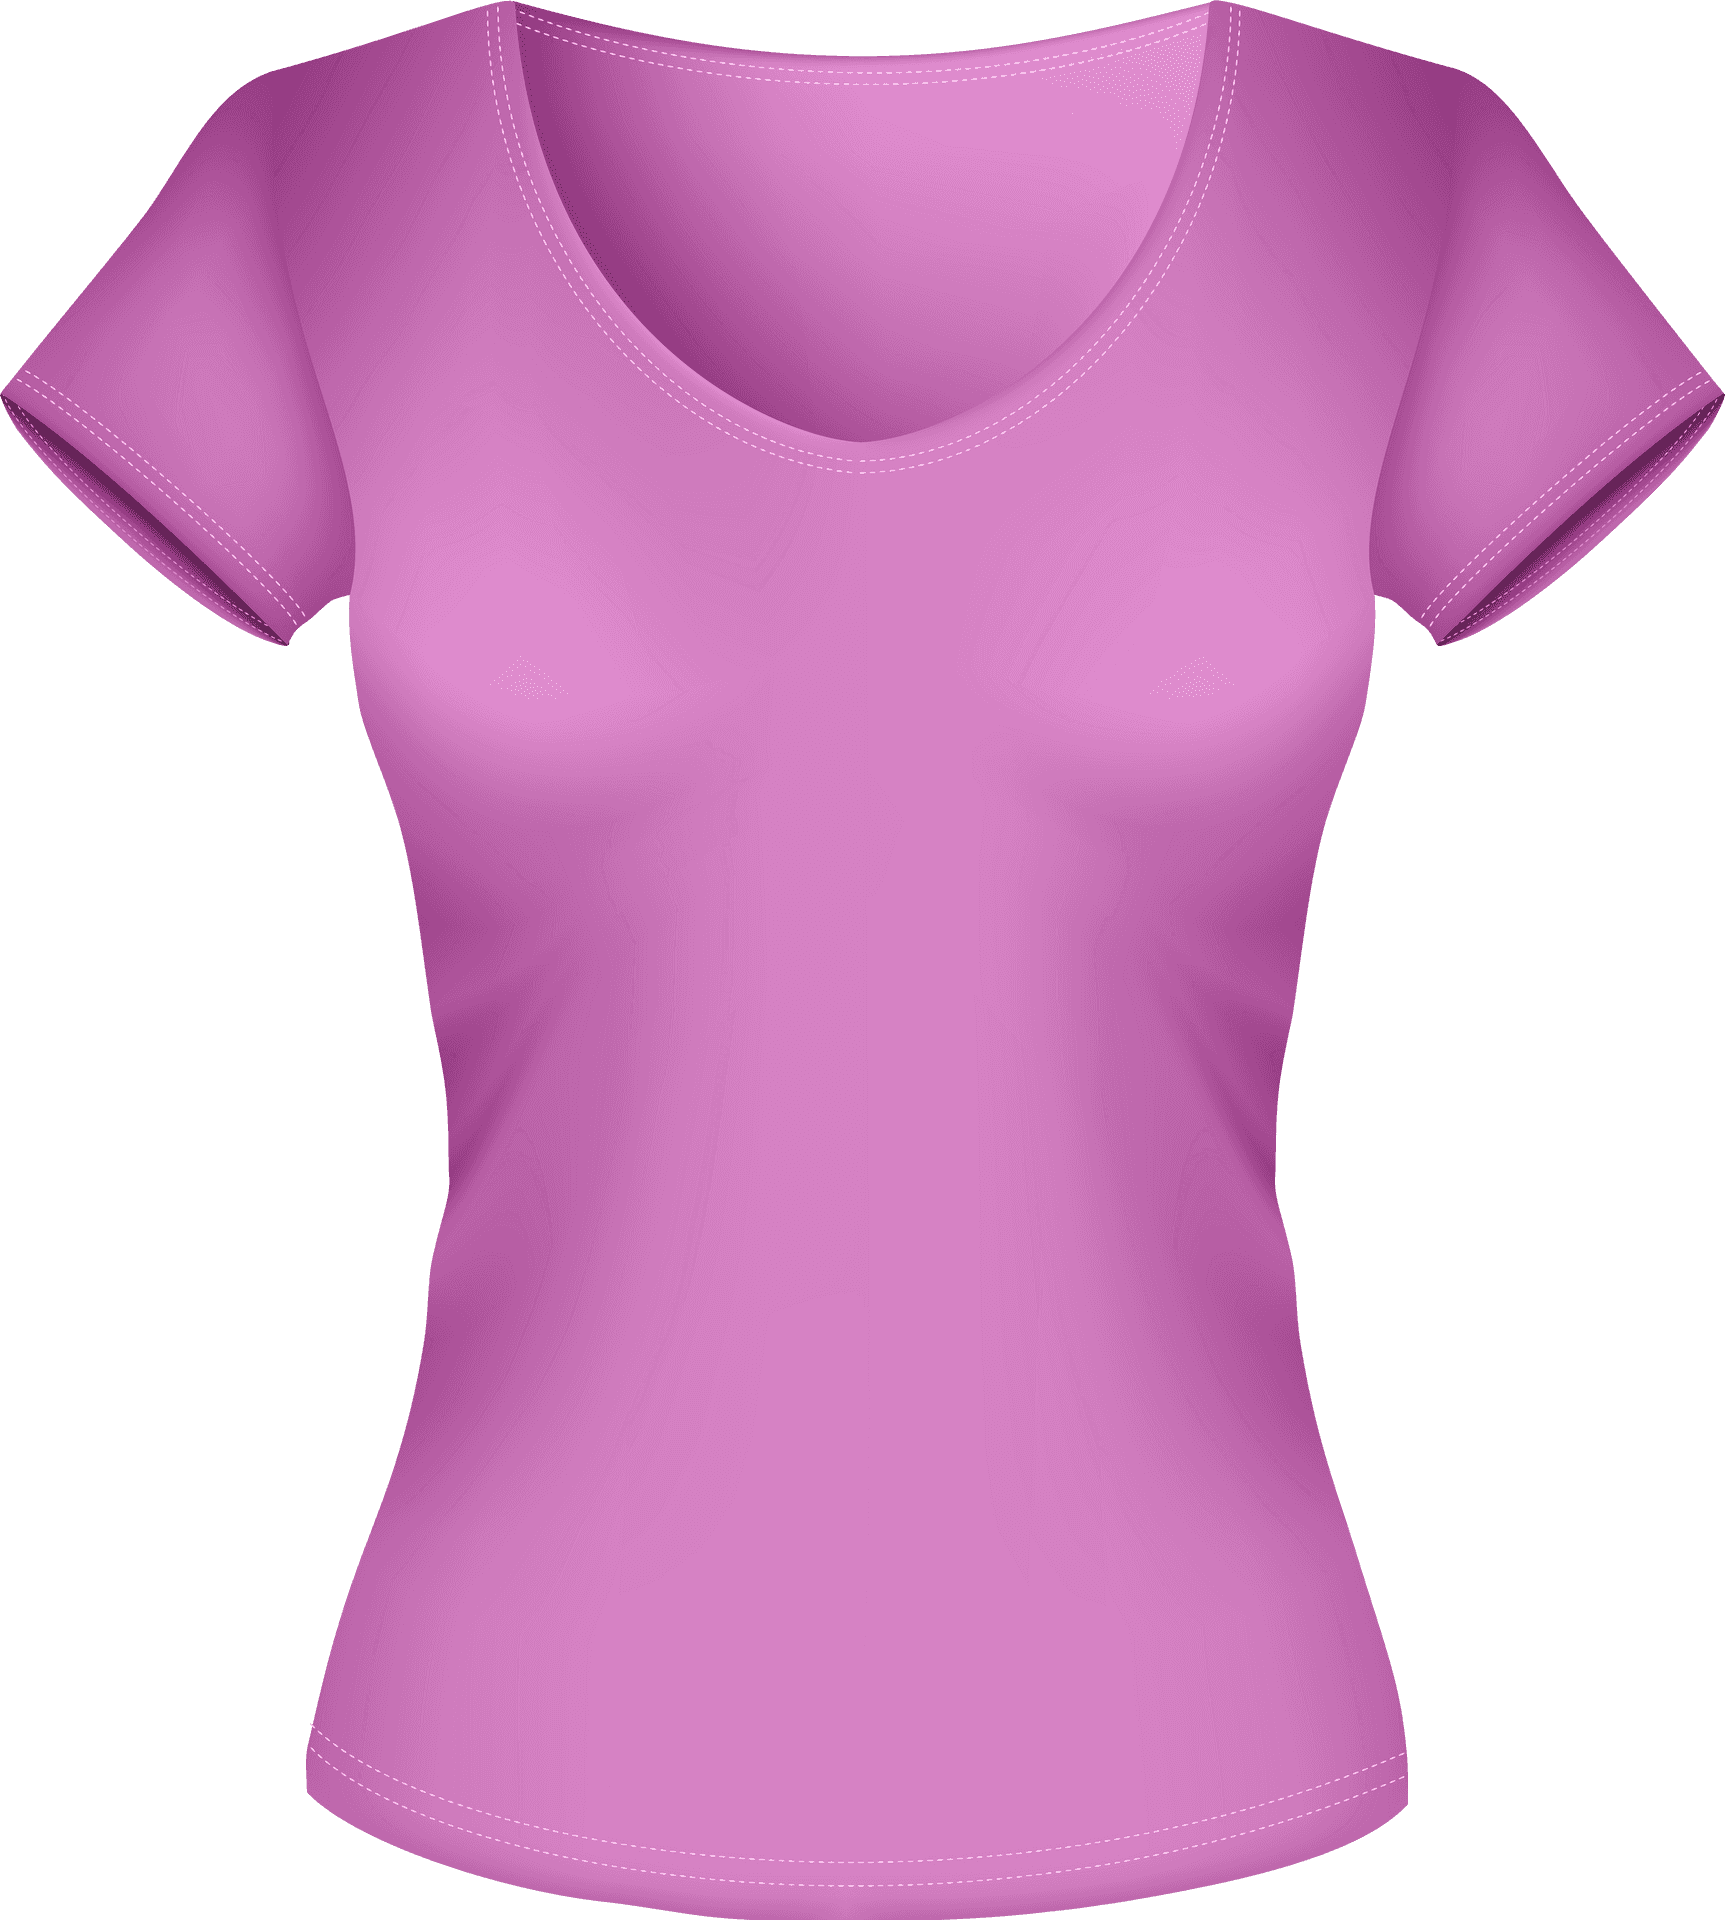 Pink Short Sleeve Blouse Mockup PNG image